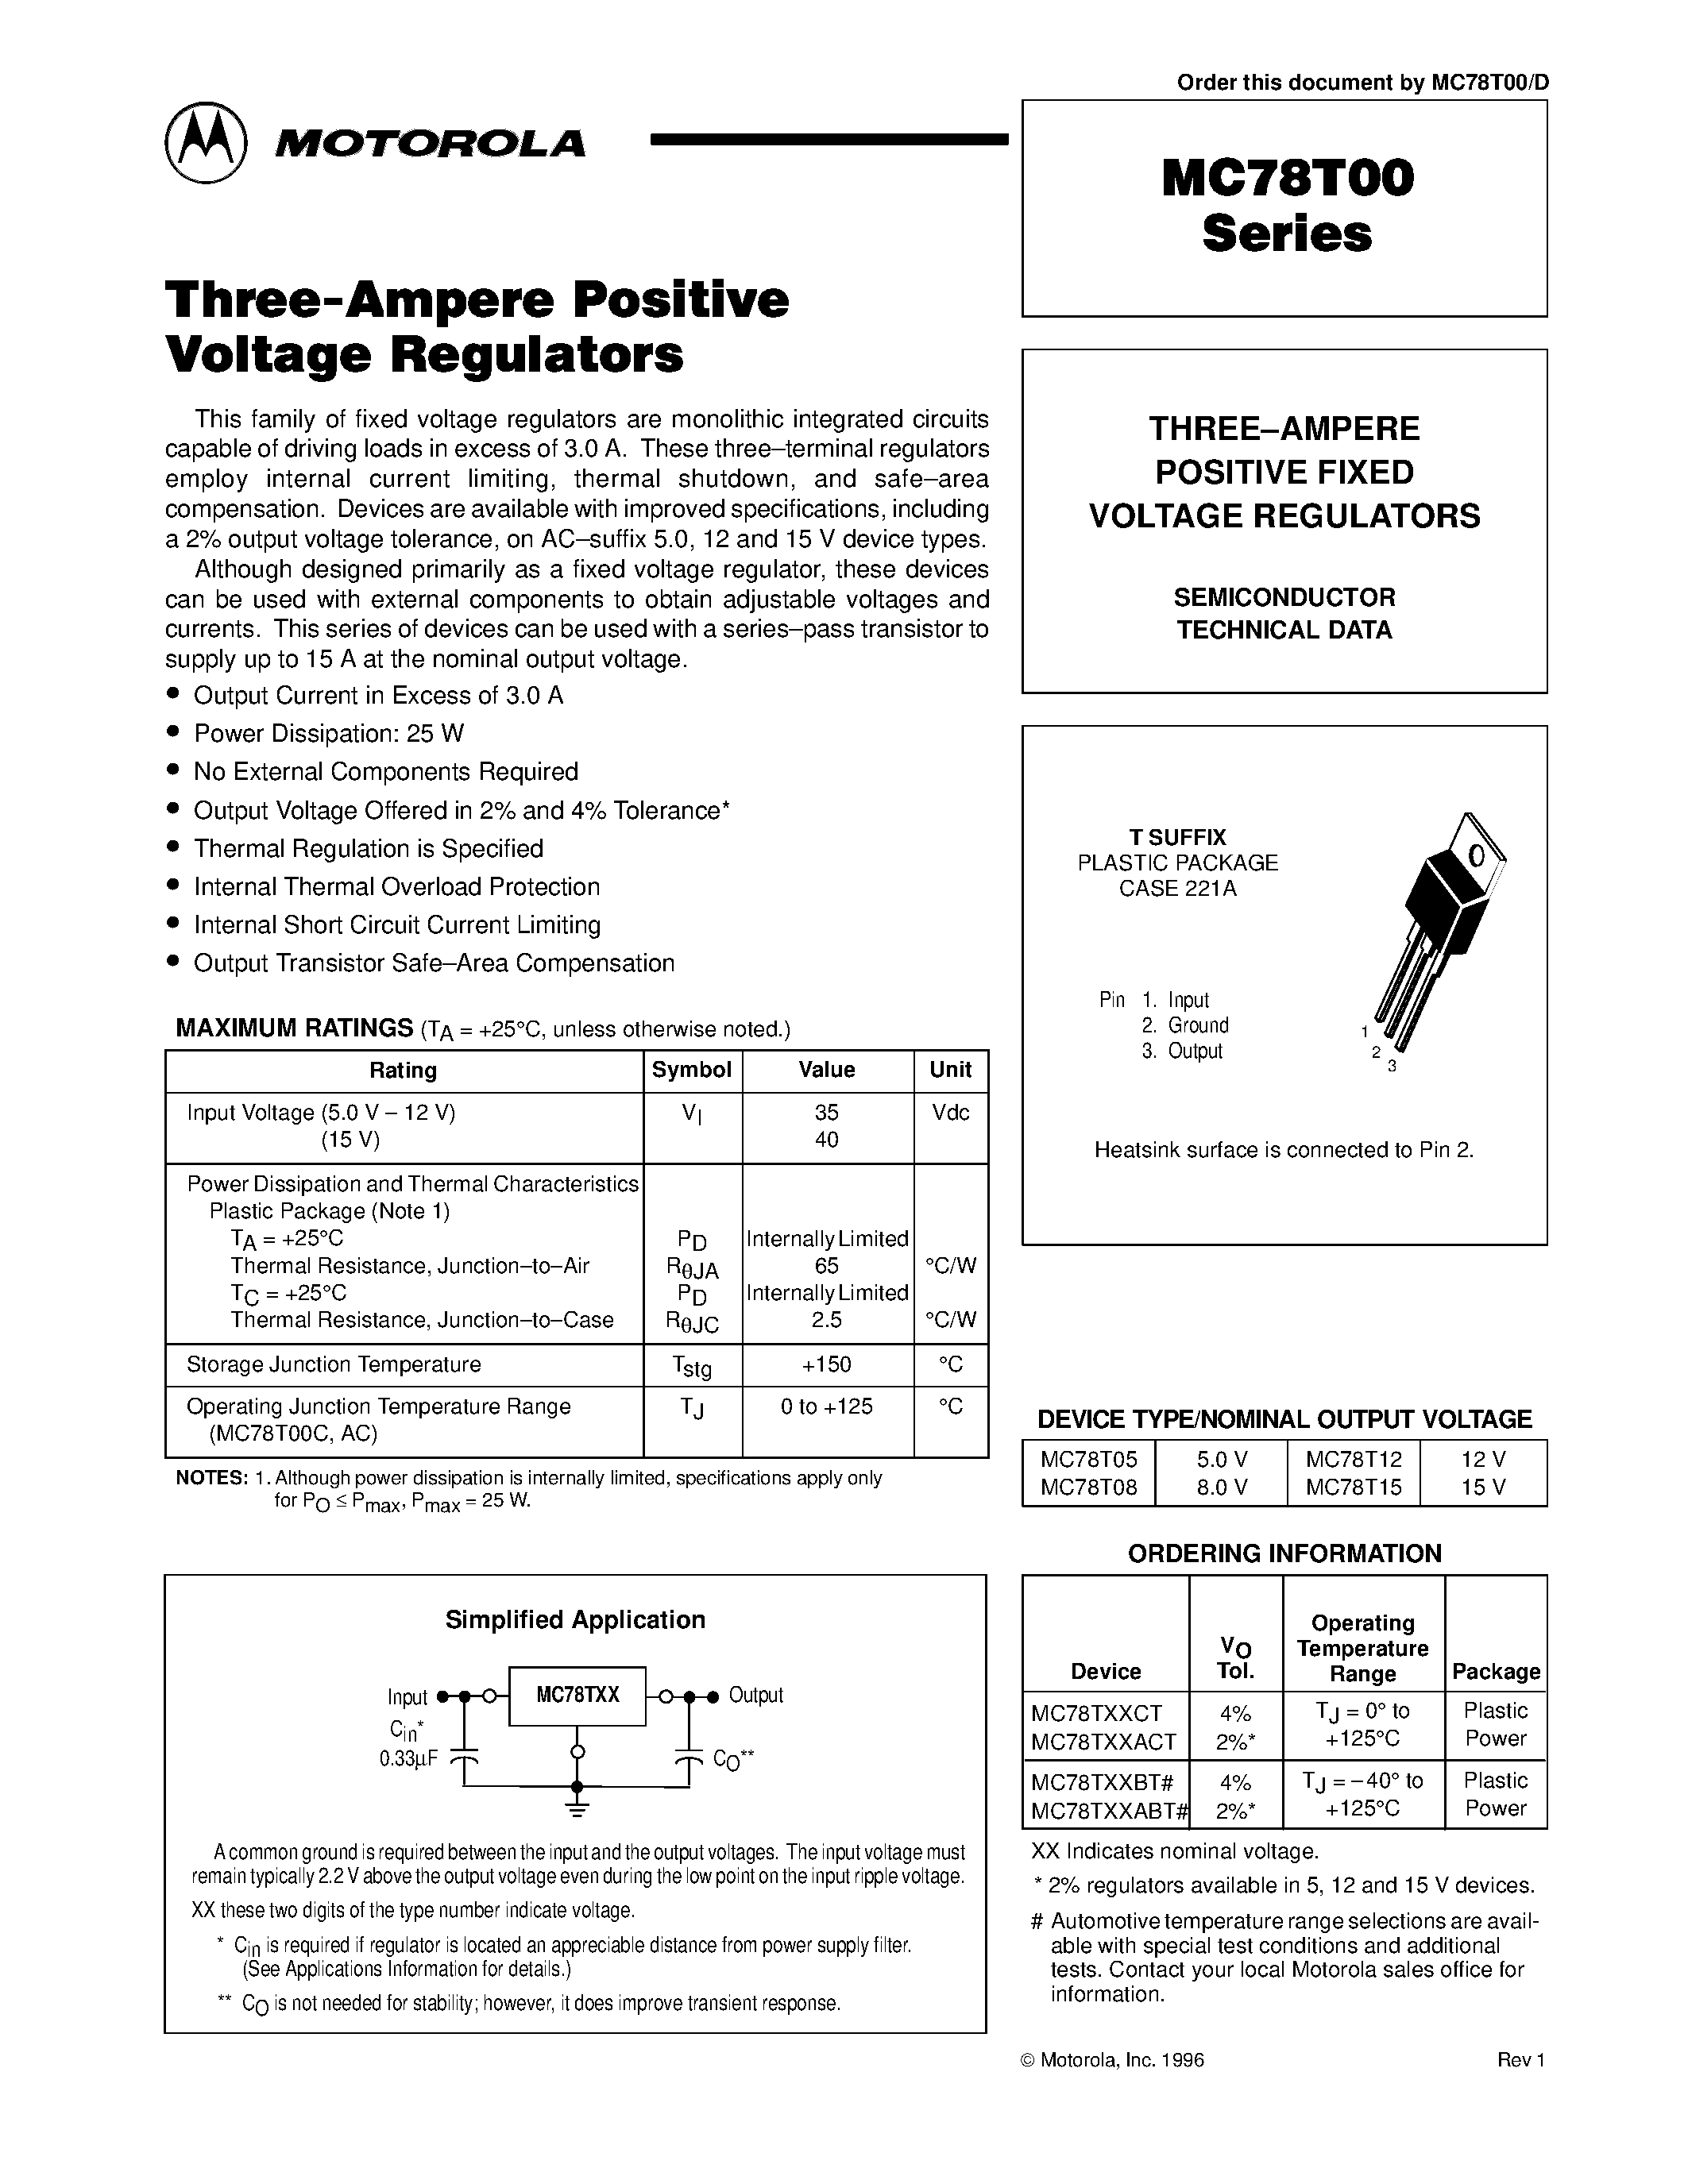 Datasheet MC78T08CT - THREE-AMPERE POSITIVE FIXED VOLTAGE REGULATORS page 1